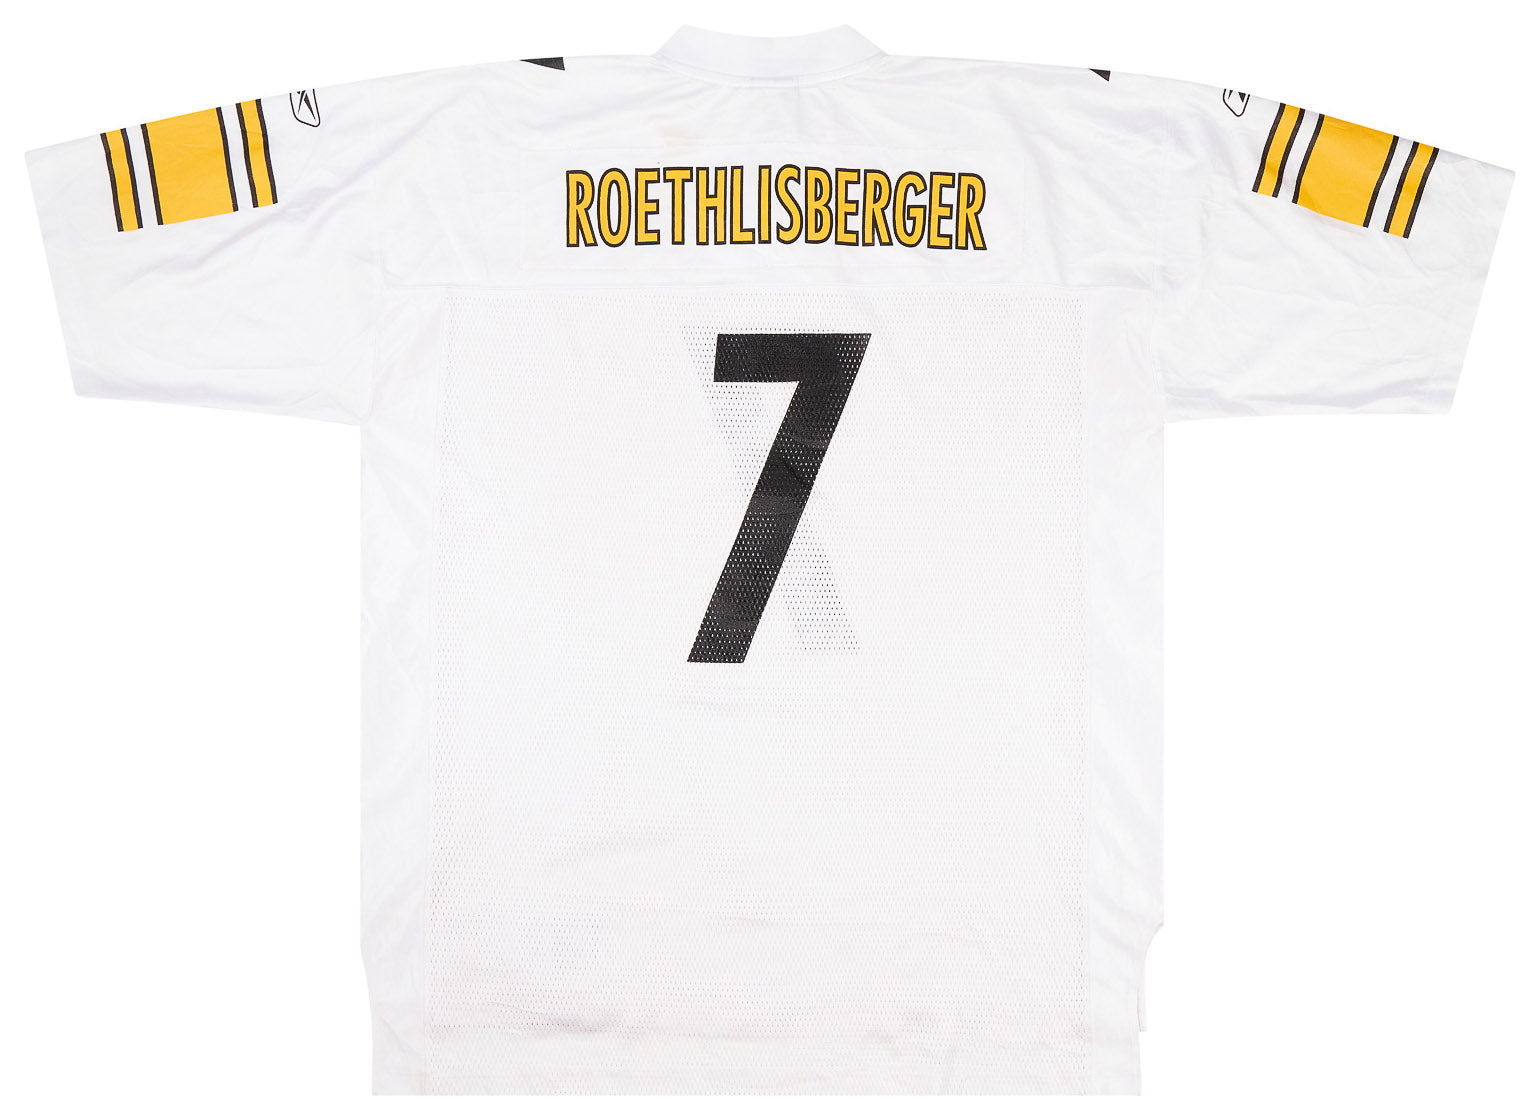 2005-06 PITTSBURGH STEELERS ROETHLISBERGER #7 REEBOK ON FIELD JERSEY (AWAY) XL